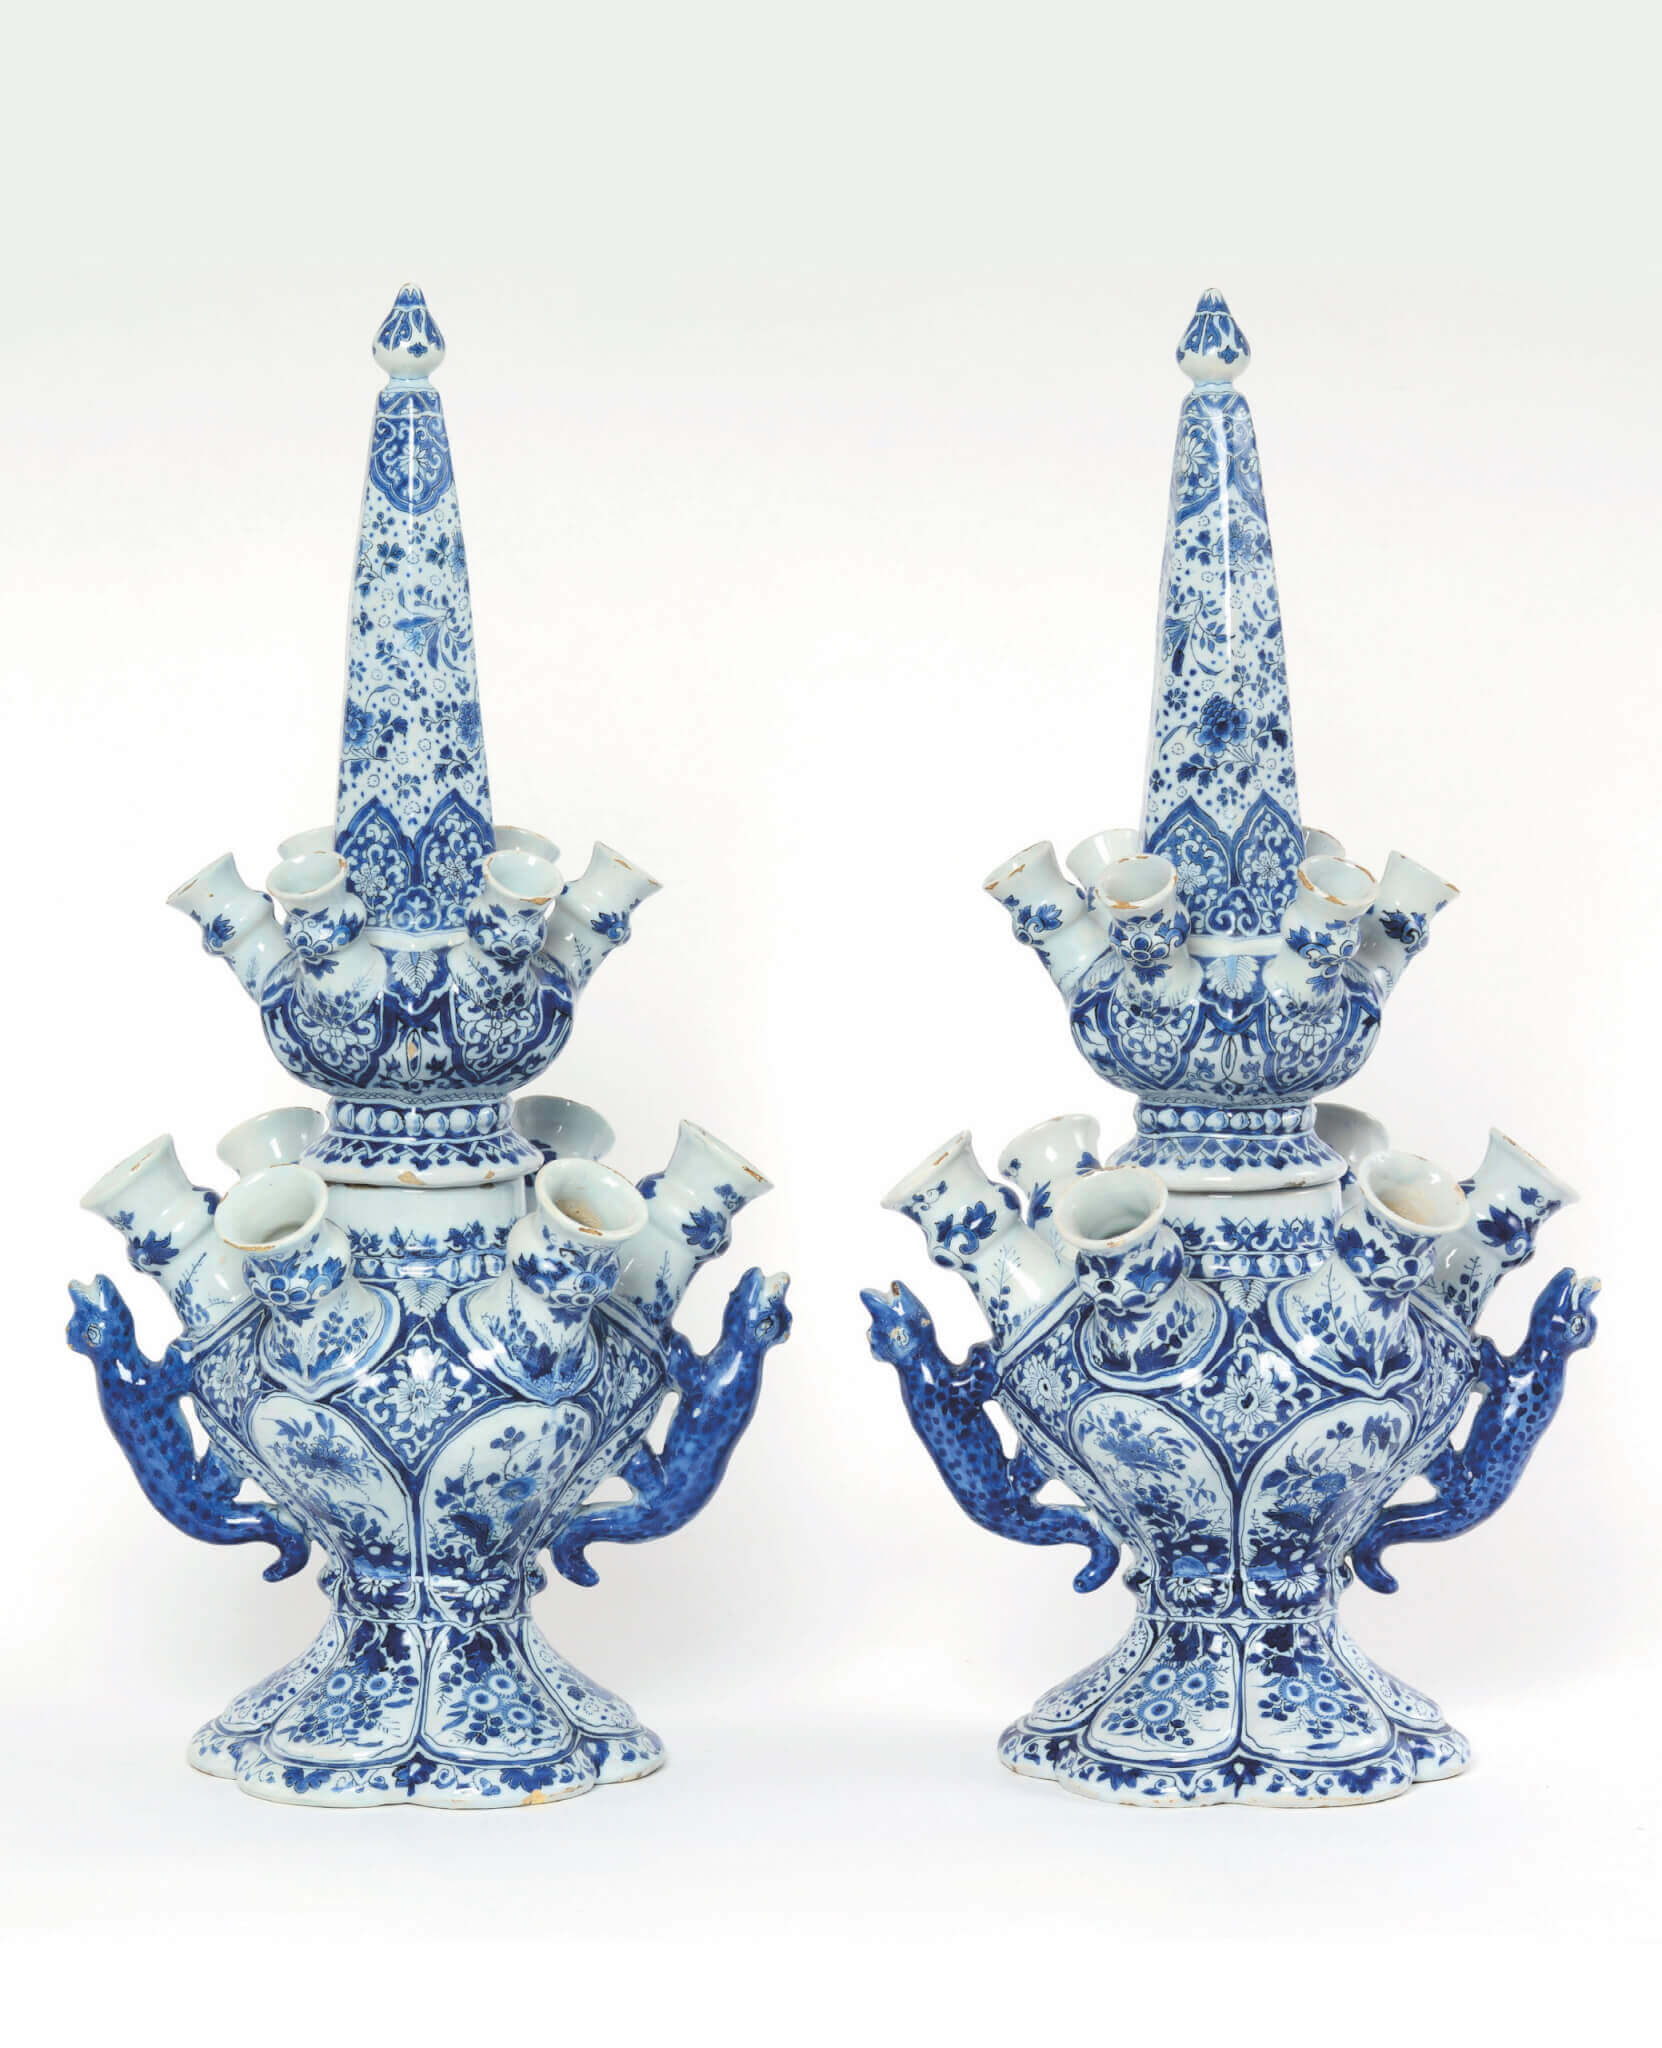 Blue and white Delftware flower vase